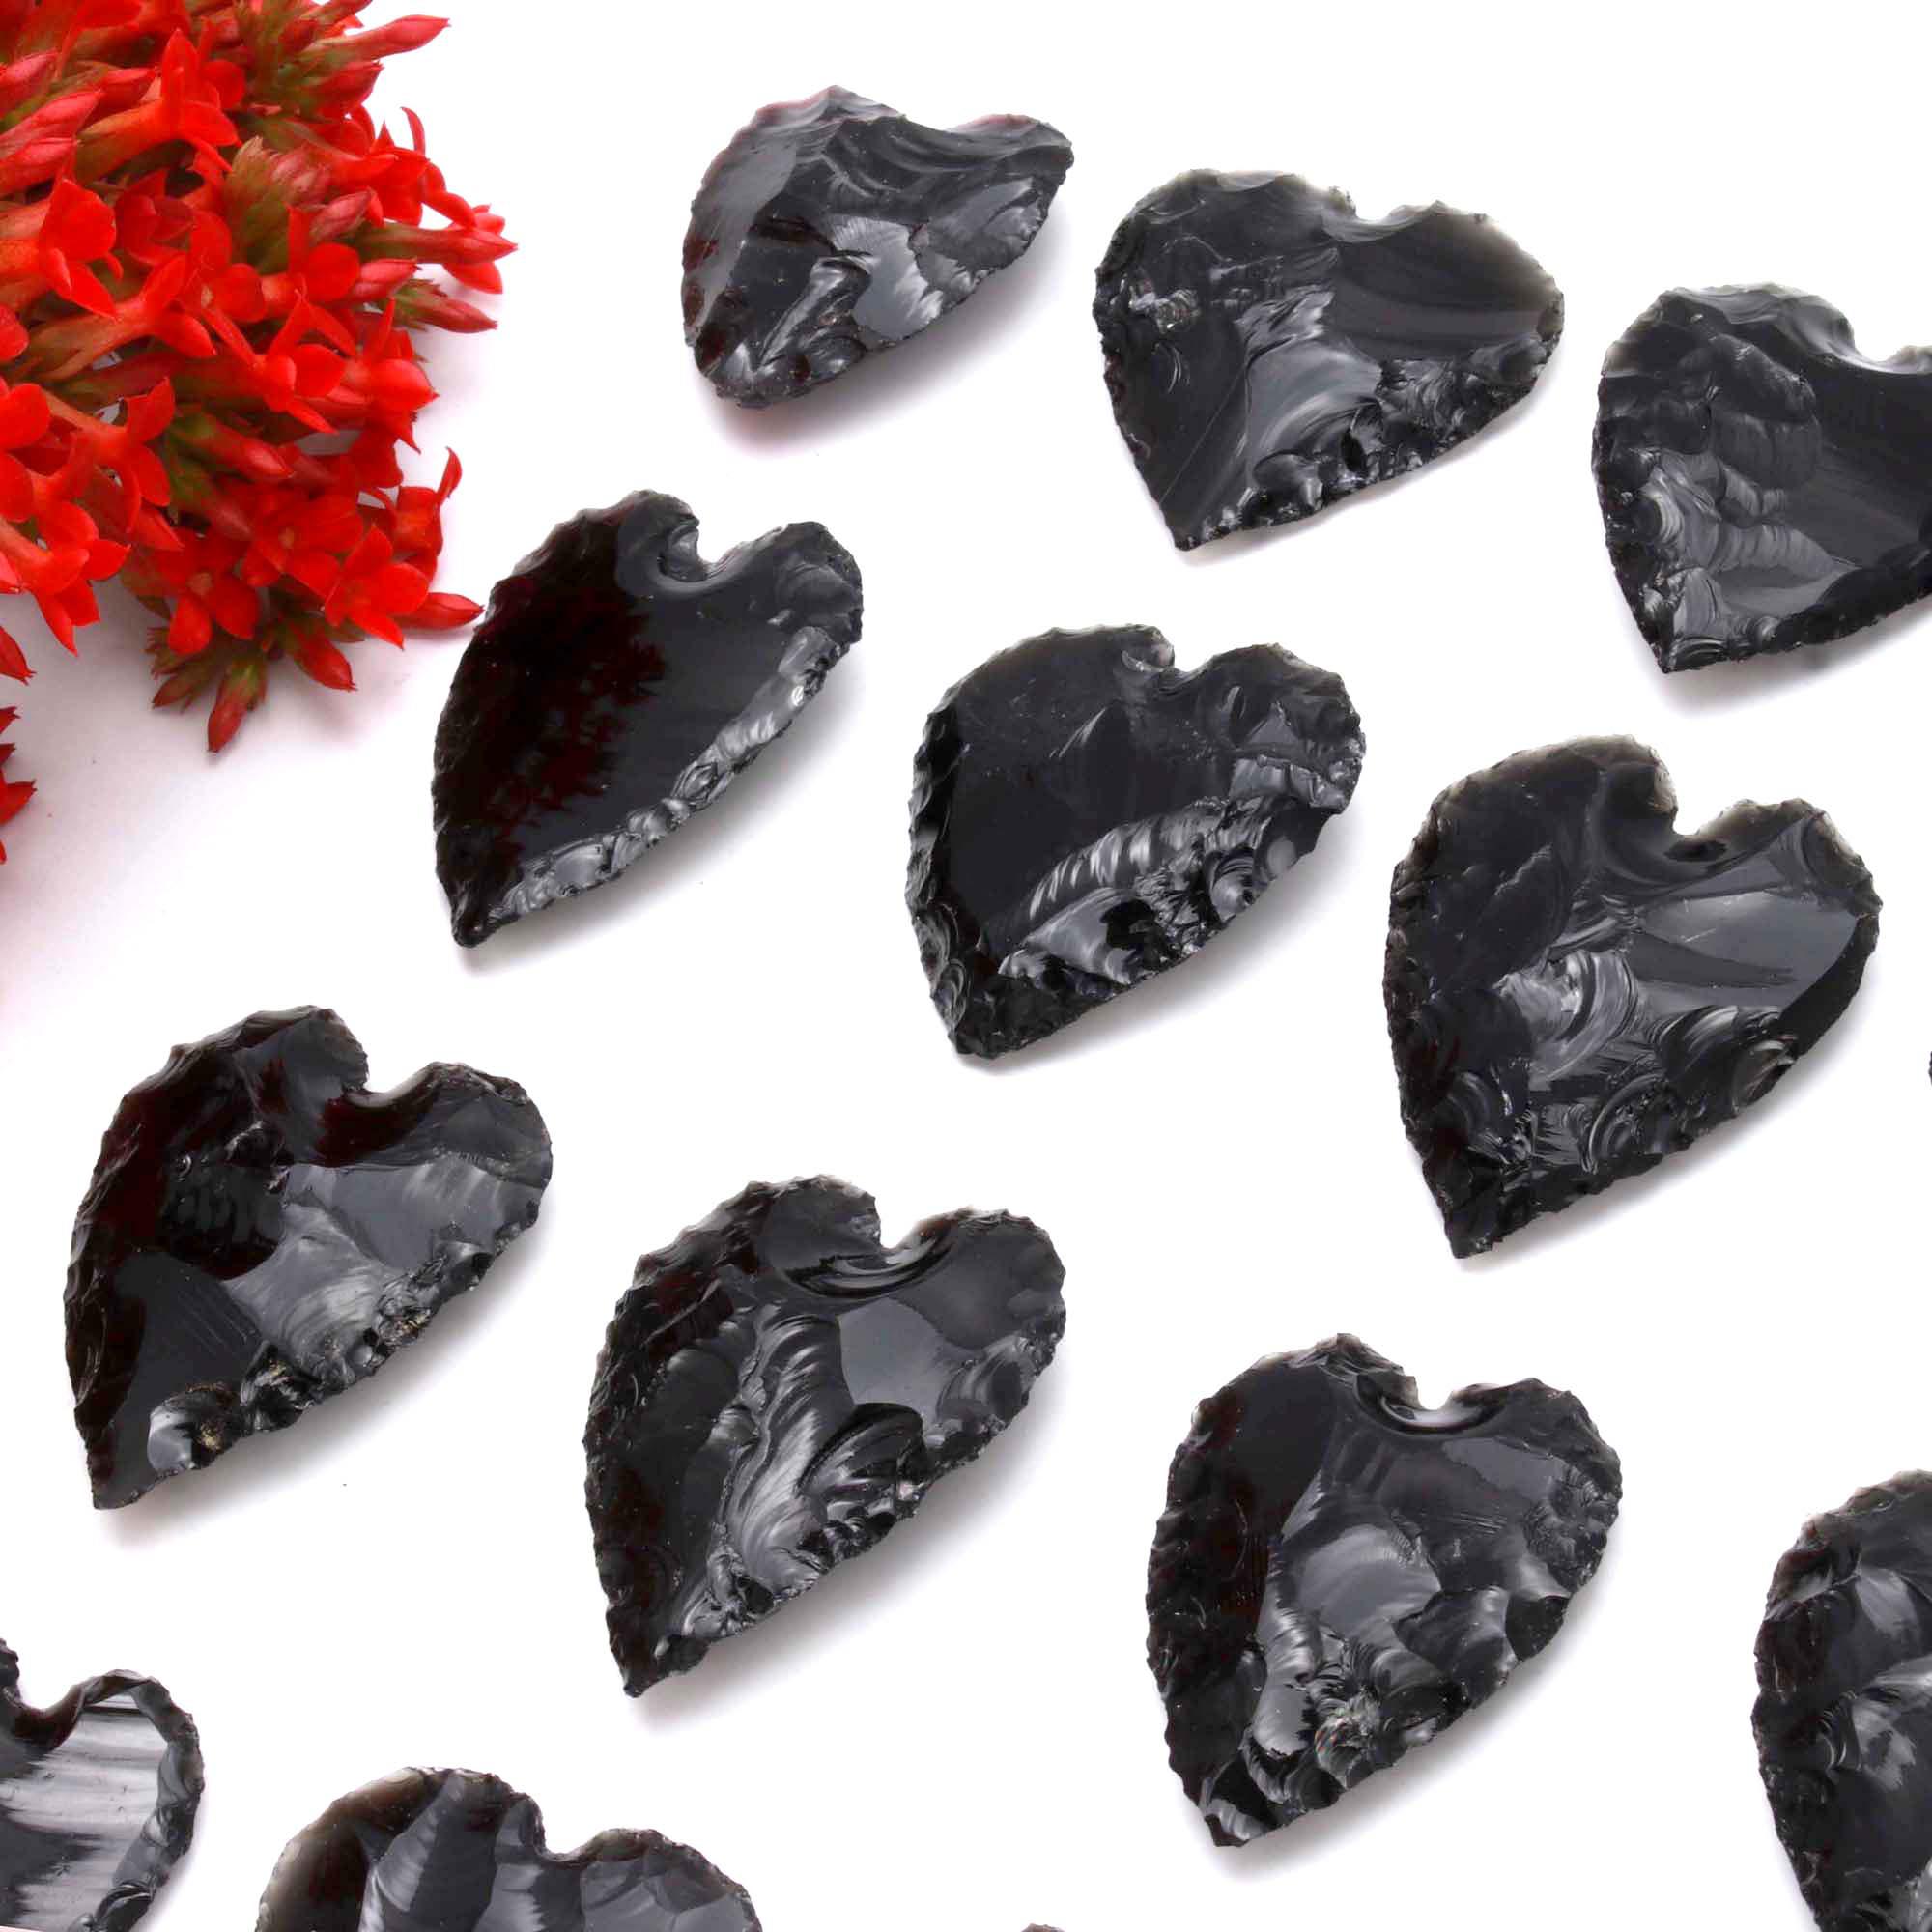 Black Obsidian Heart Carving